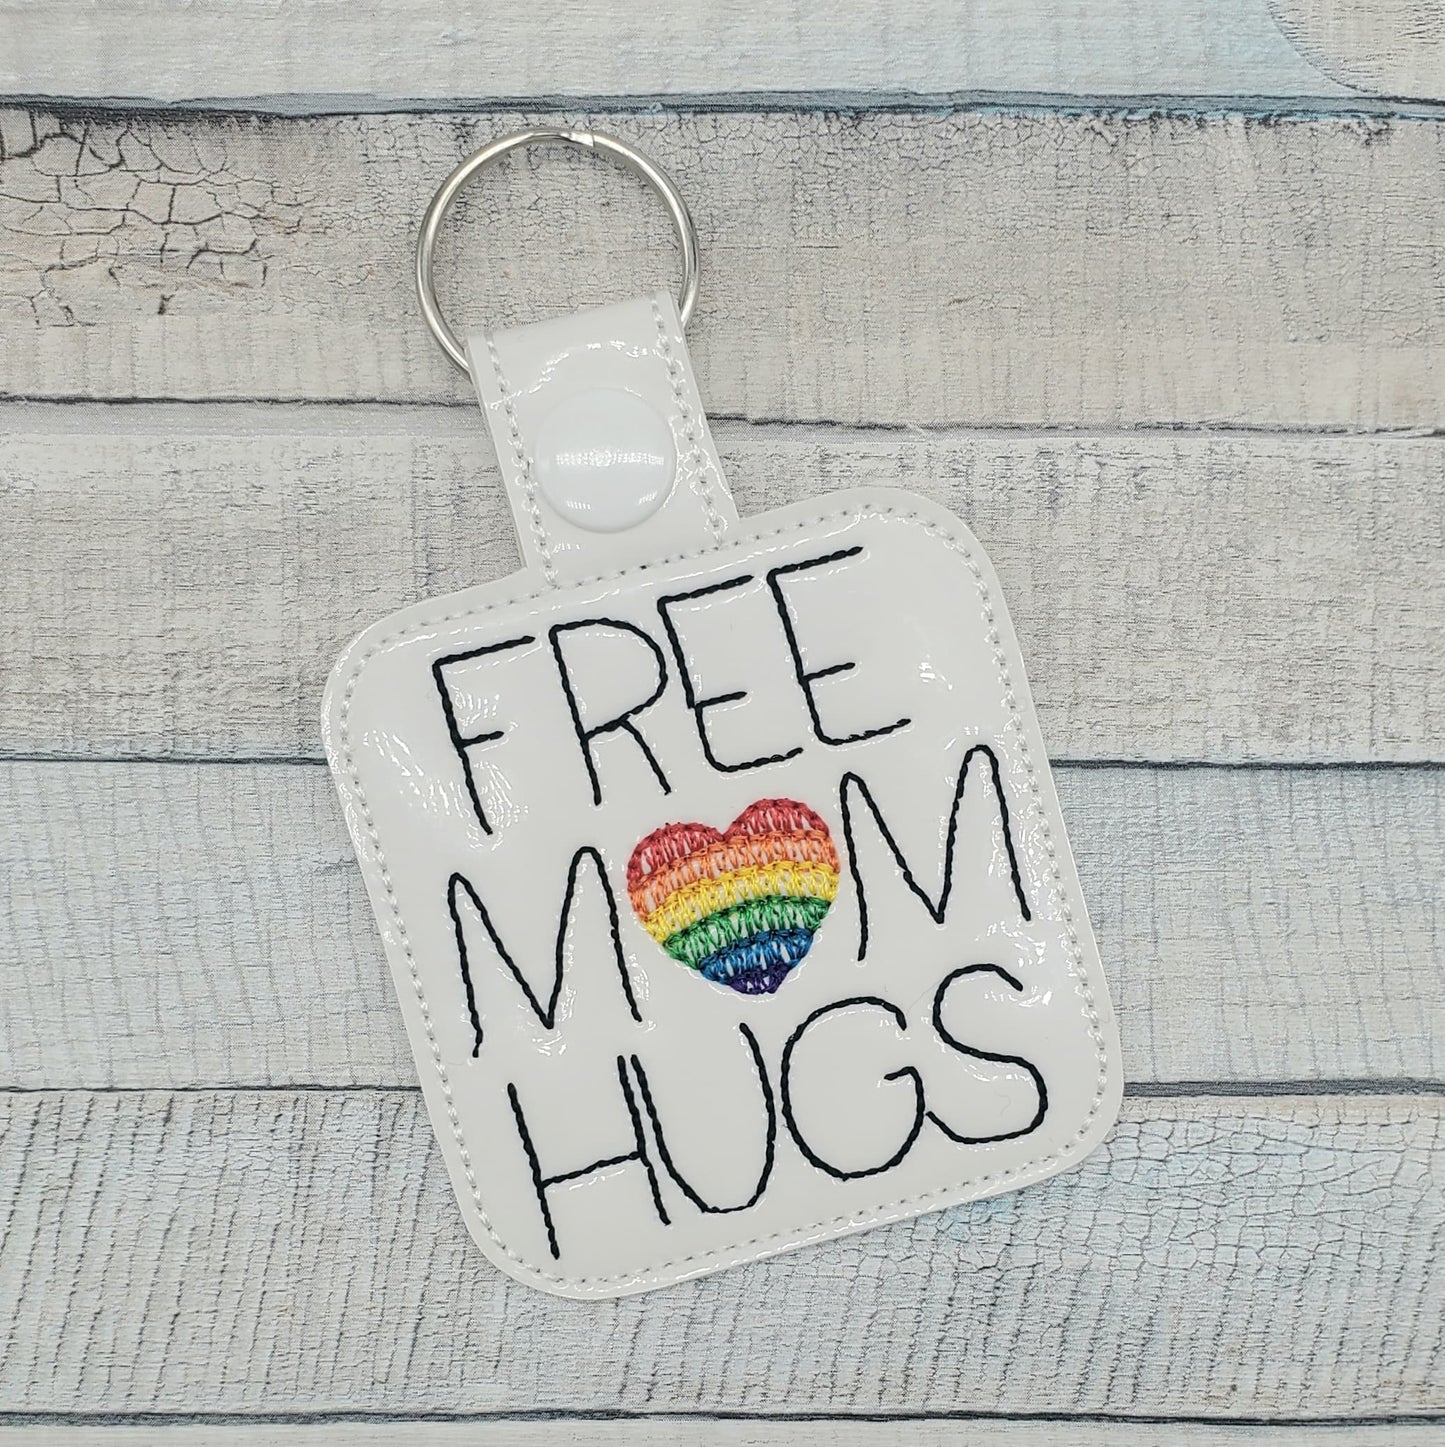 Free Mom Hugs Fobs - DIGITAL Embroidery DESIGN